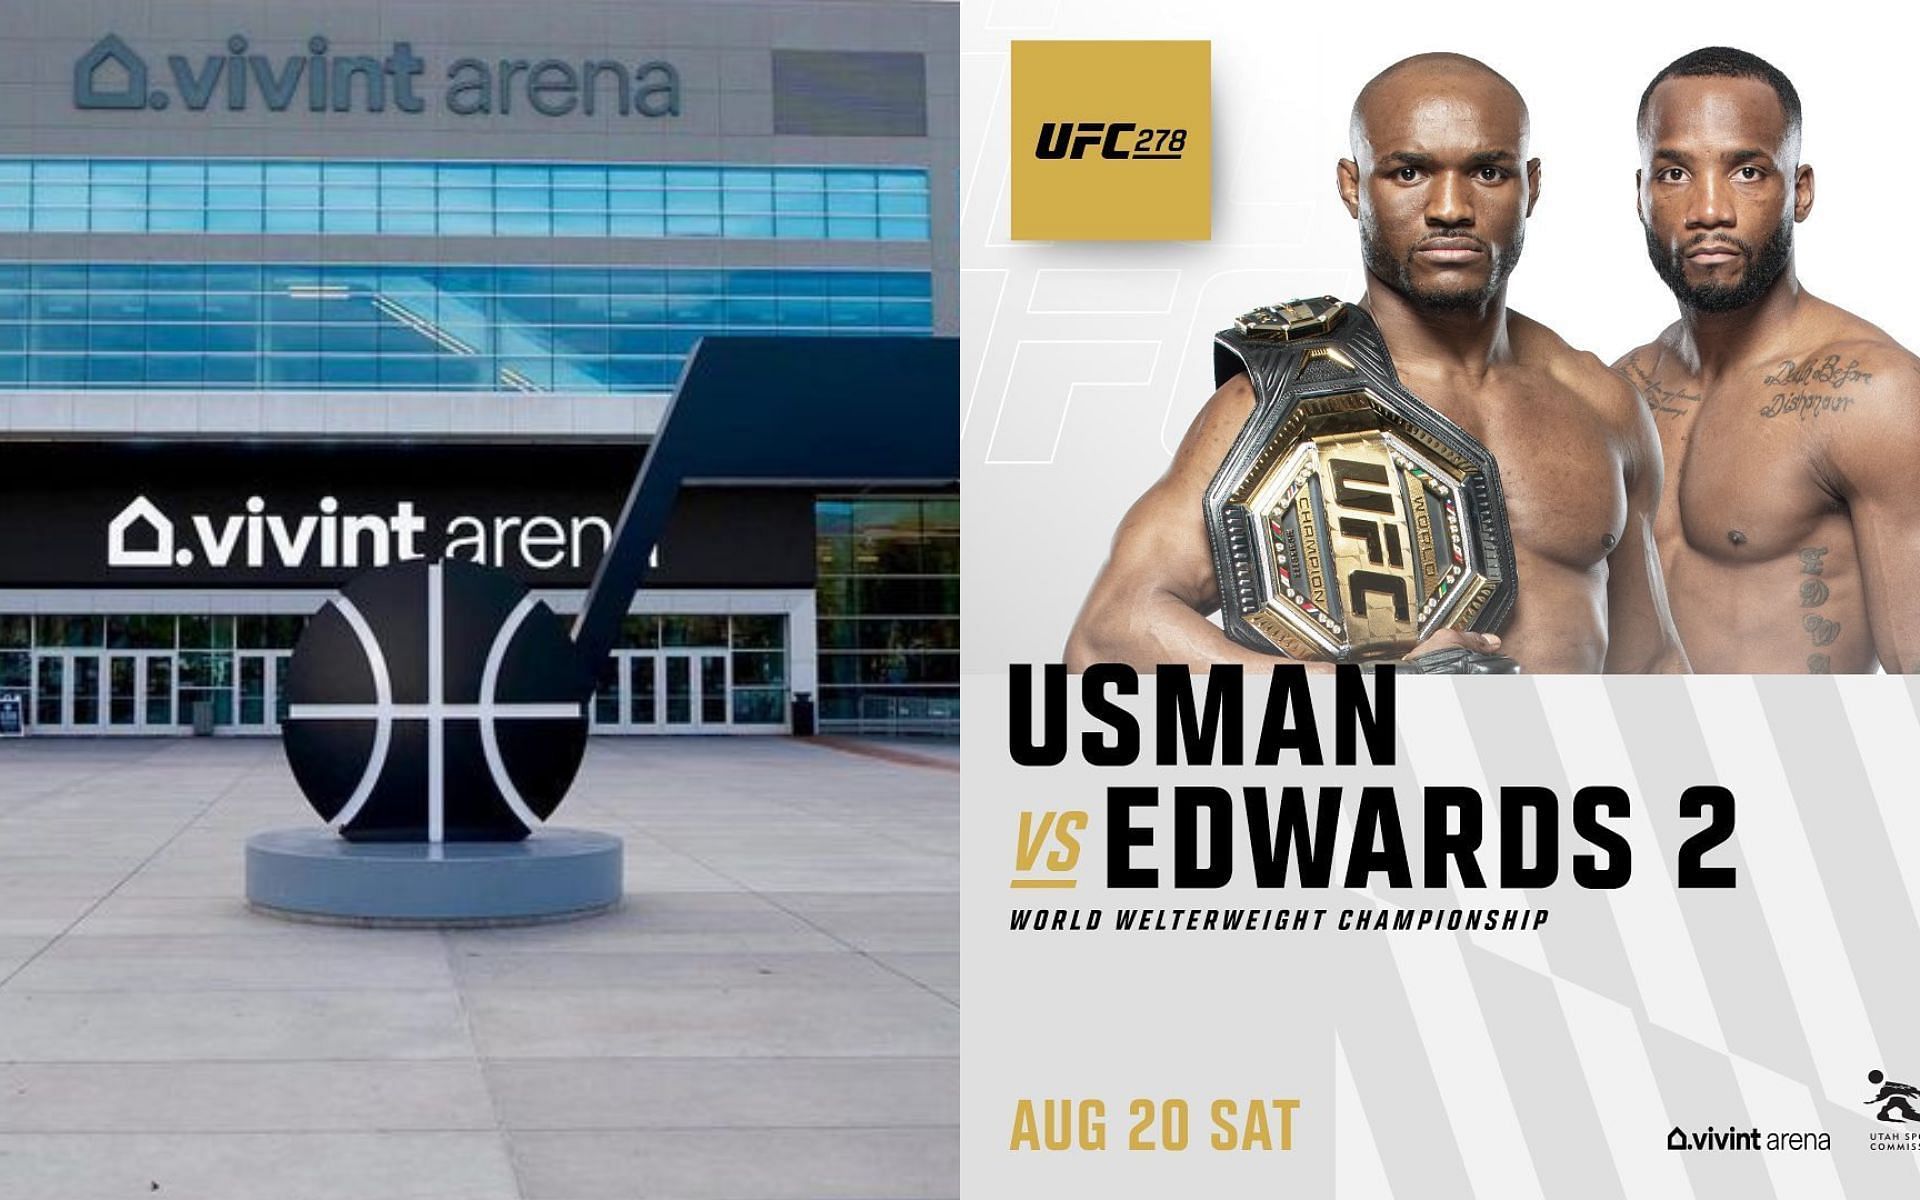 Vivint arena (left), UFC 278 poster (right) [Images via @vivintarena on Instagram]